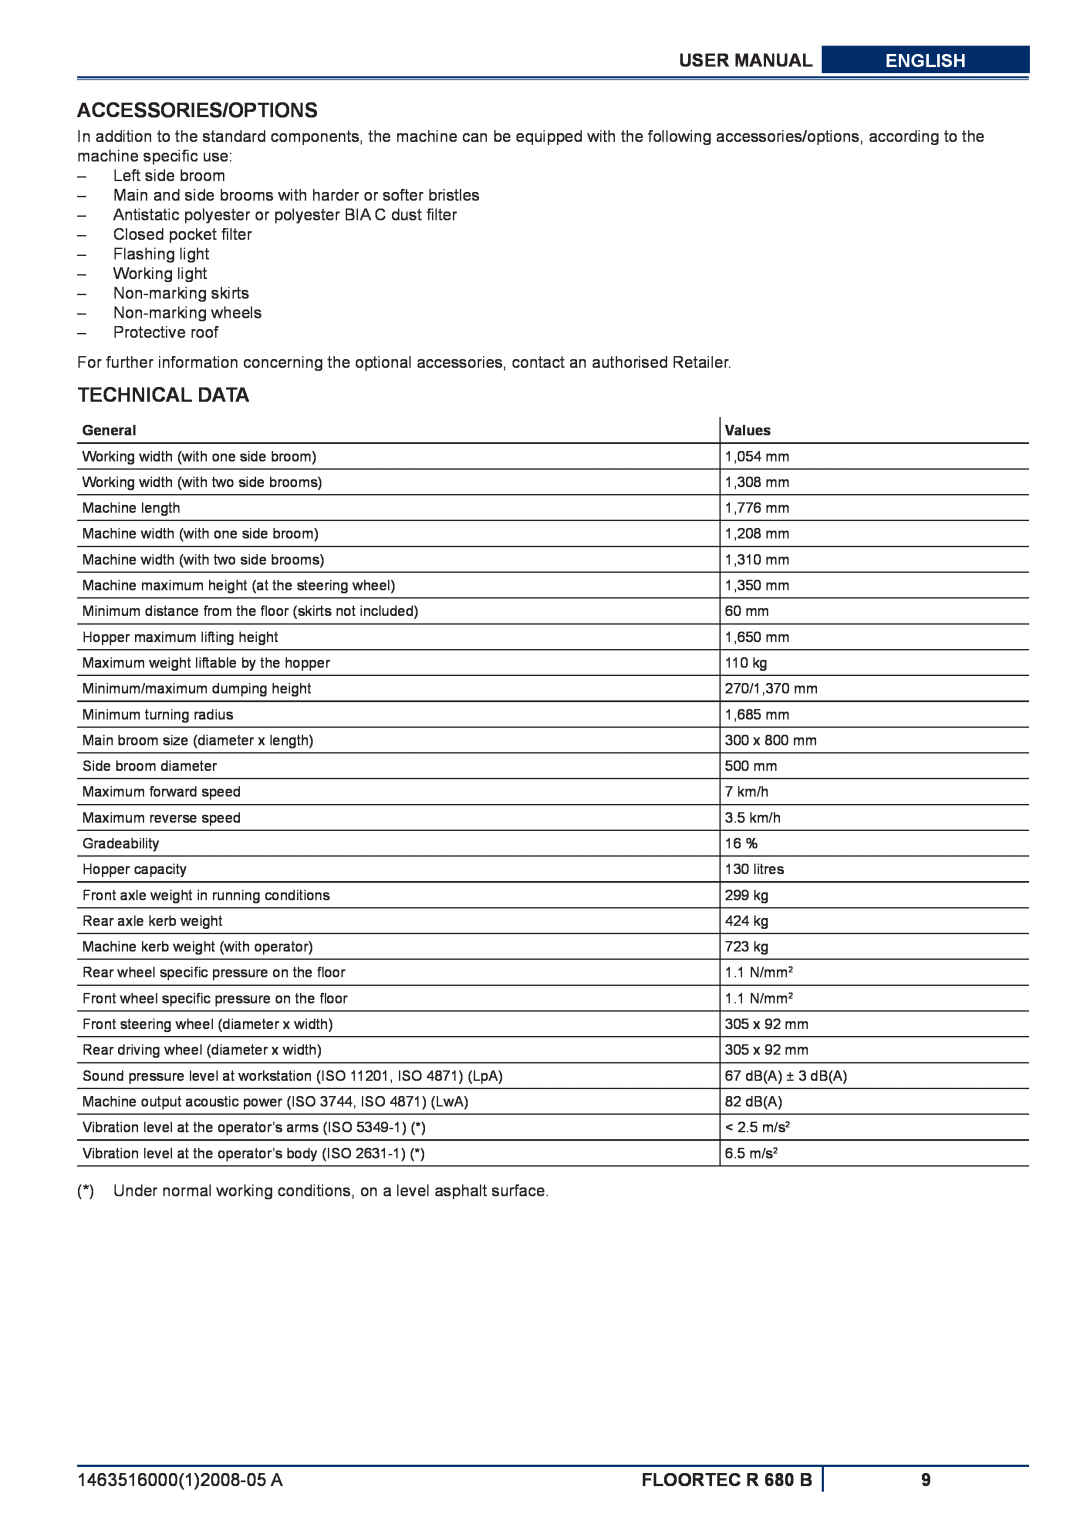 Nilfisk-ALTO manuel dutilisation Accessories/Options, Technical Data, User Manual, English, FLOORTEC R 680 B 